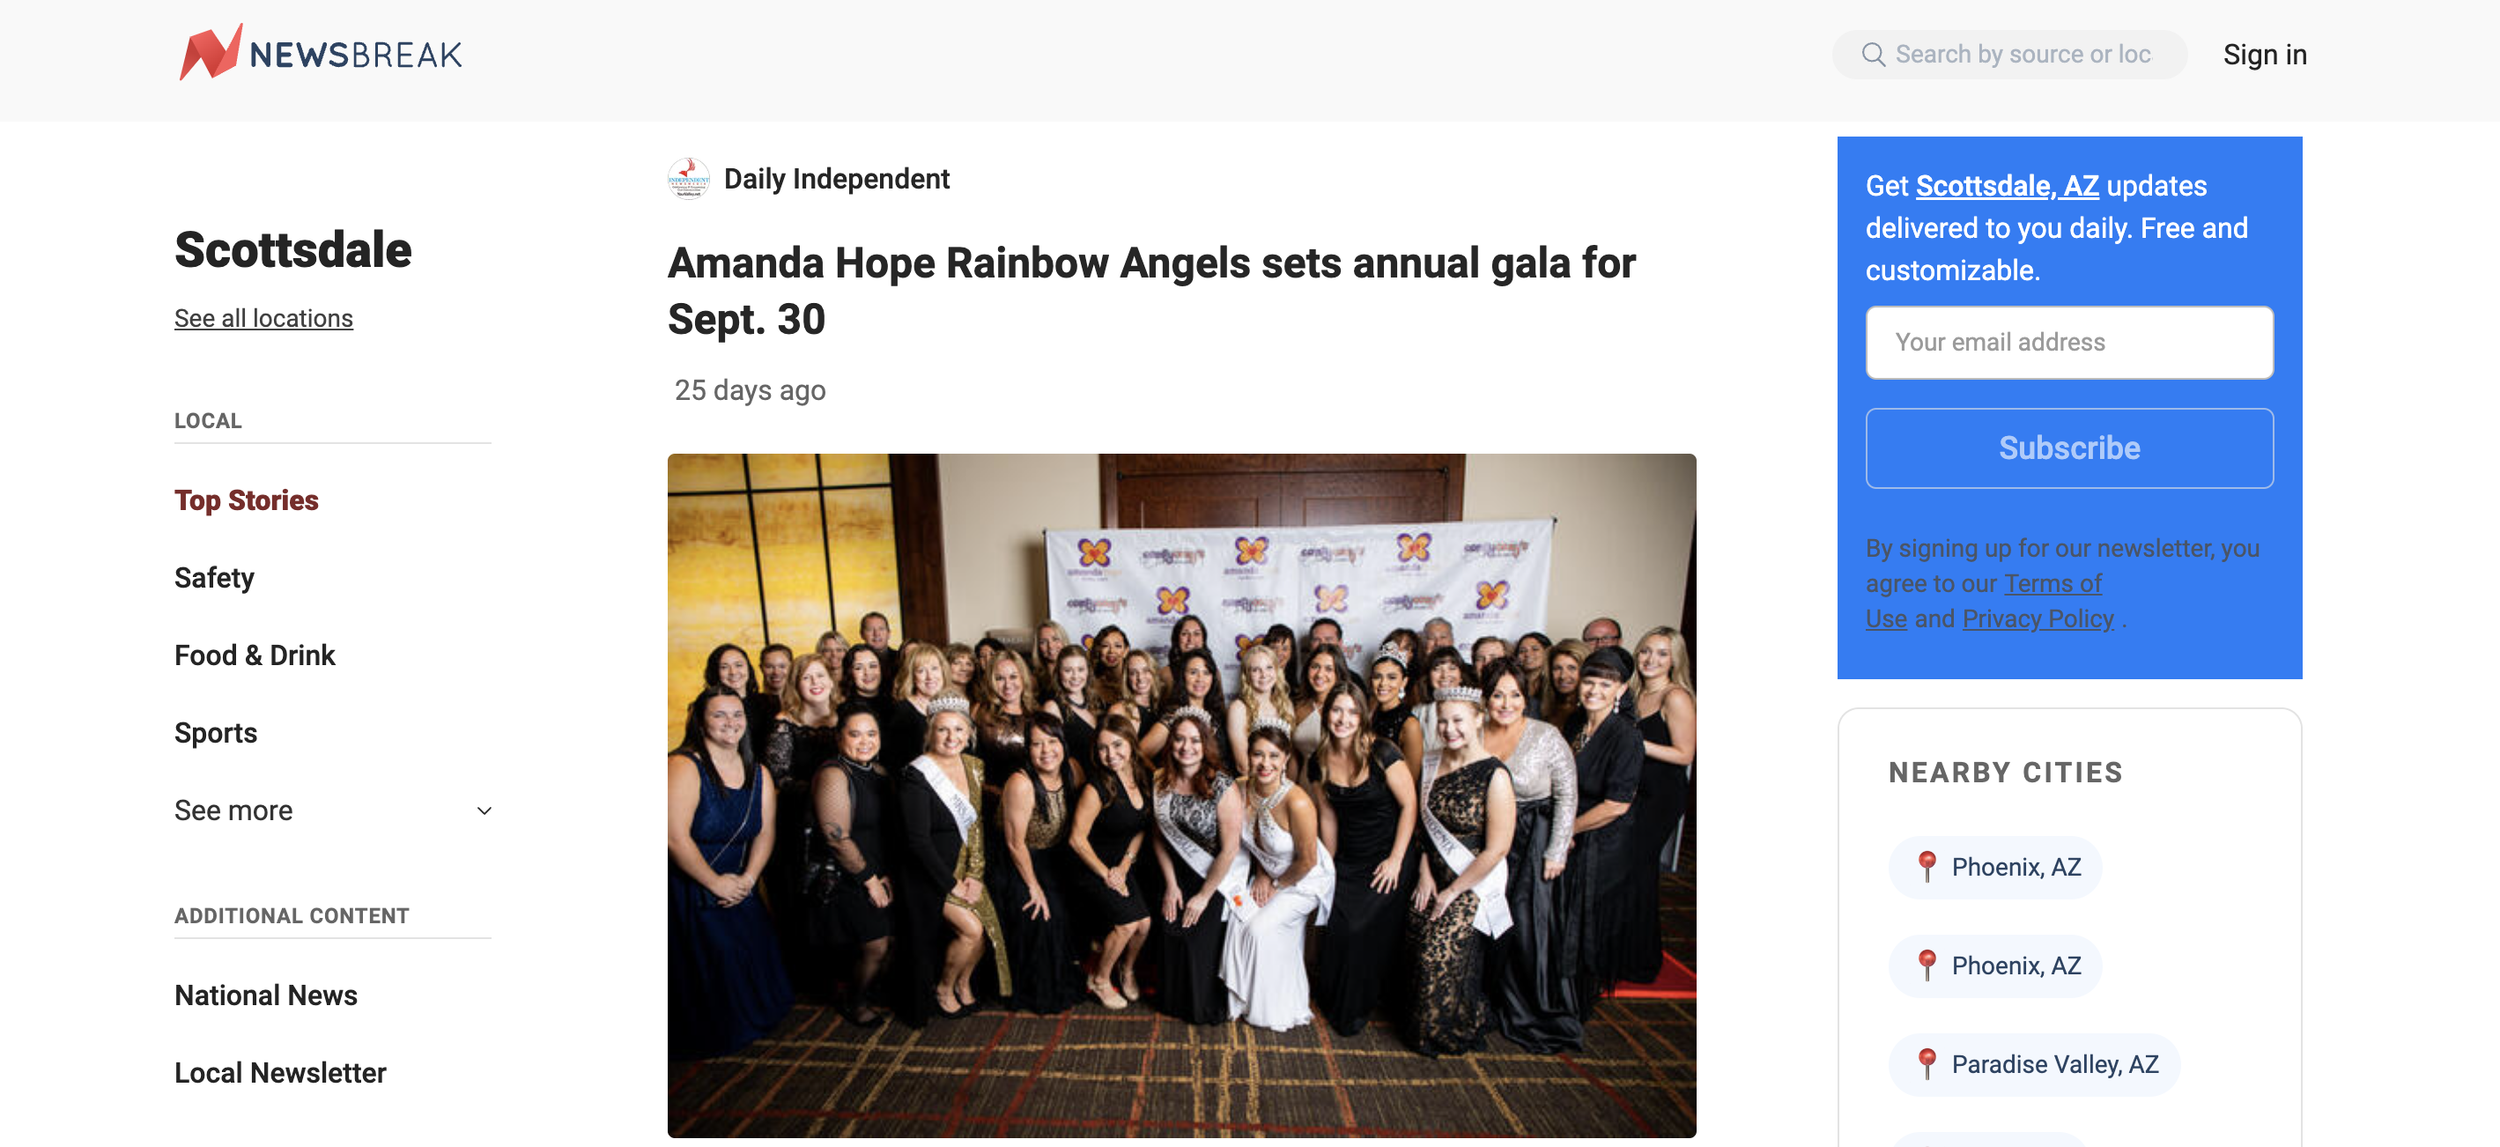 Newsbreak: Amanda Hope Rainbow Angels sets annual gala for Sept. 30